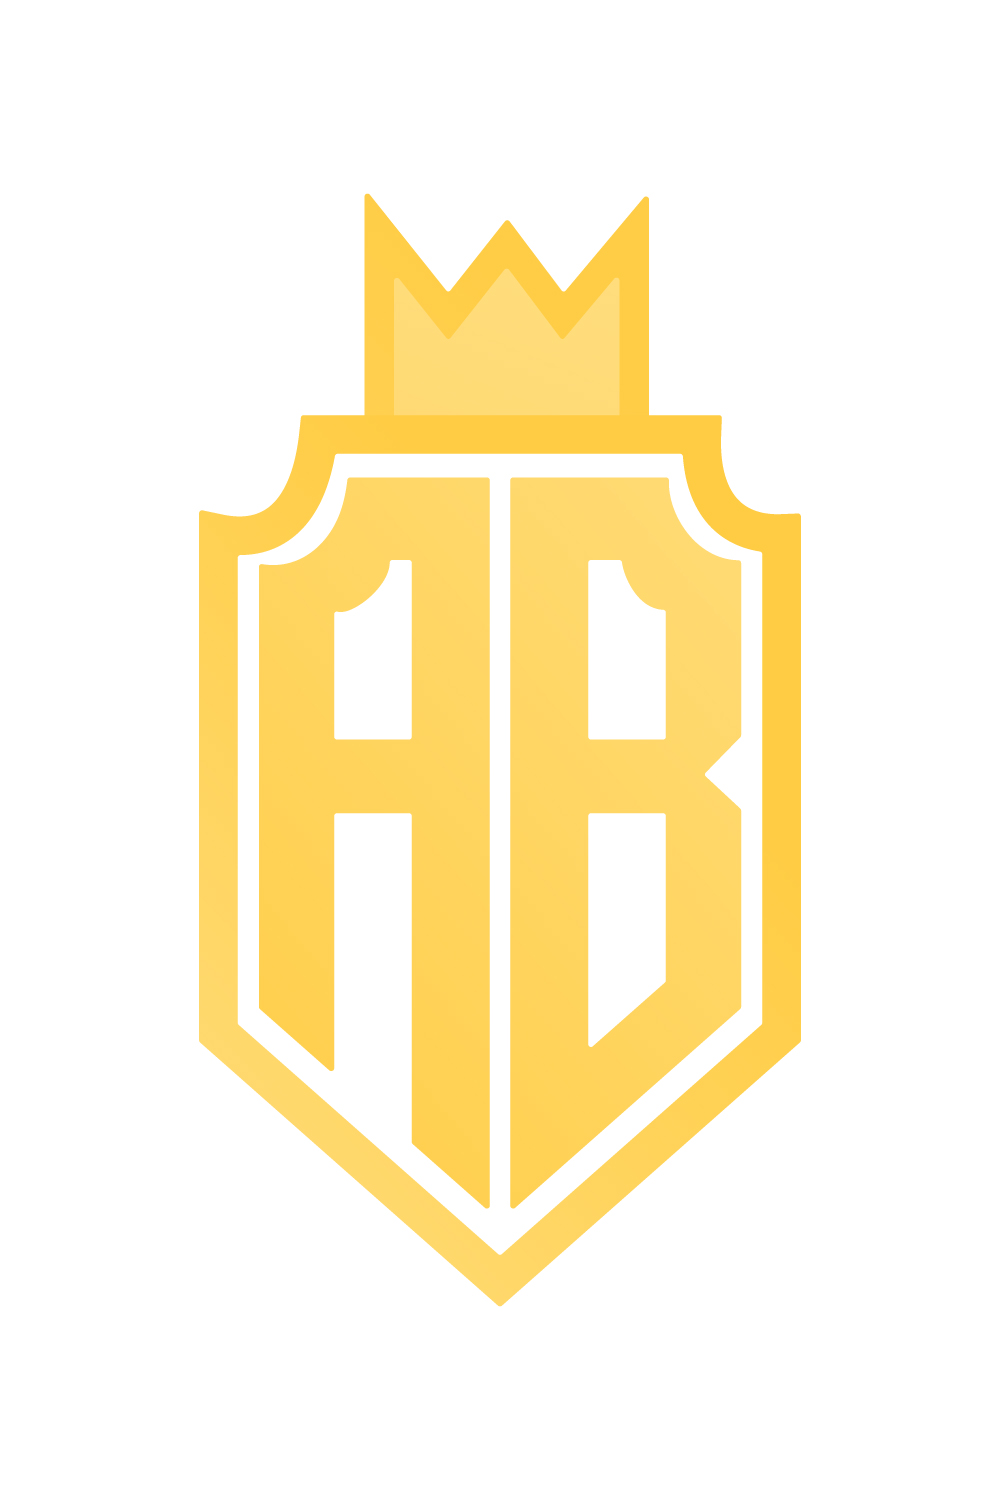 Initials AB Crown logo design vector images AB letter logo template arts BA golden color Crown logo best icon pinterest preview image.